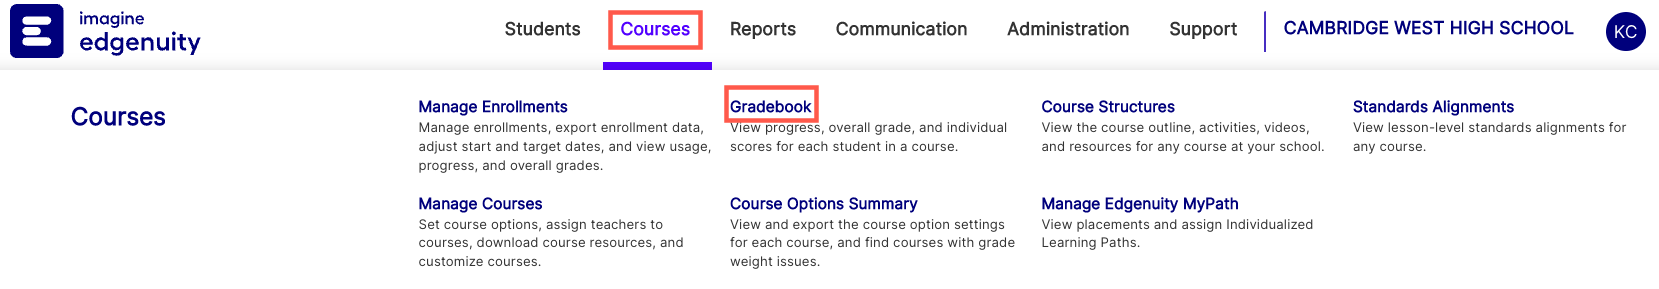 G-Courses-Gradebook1.png